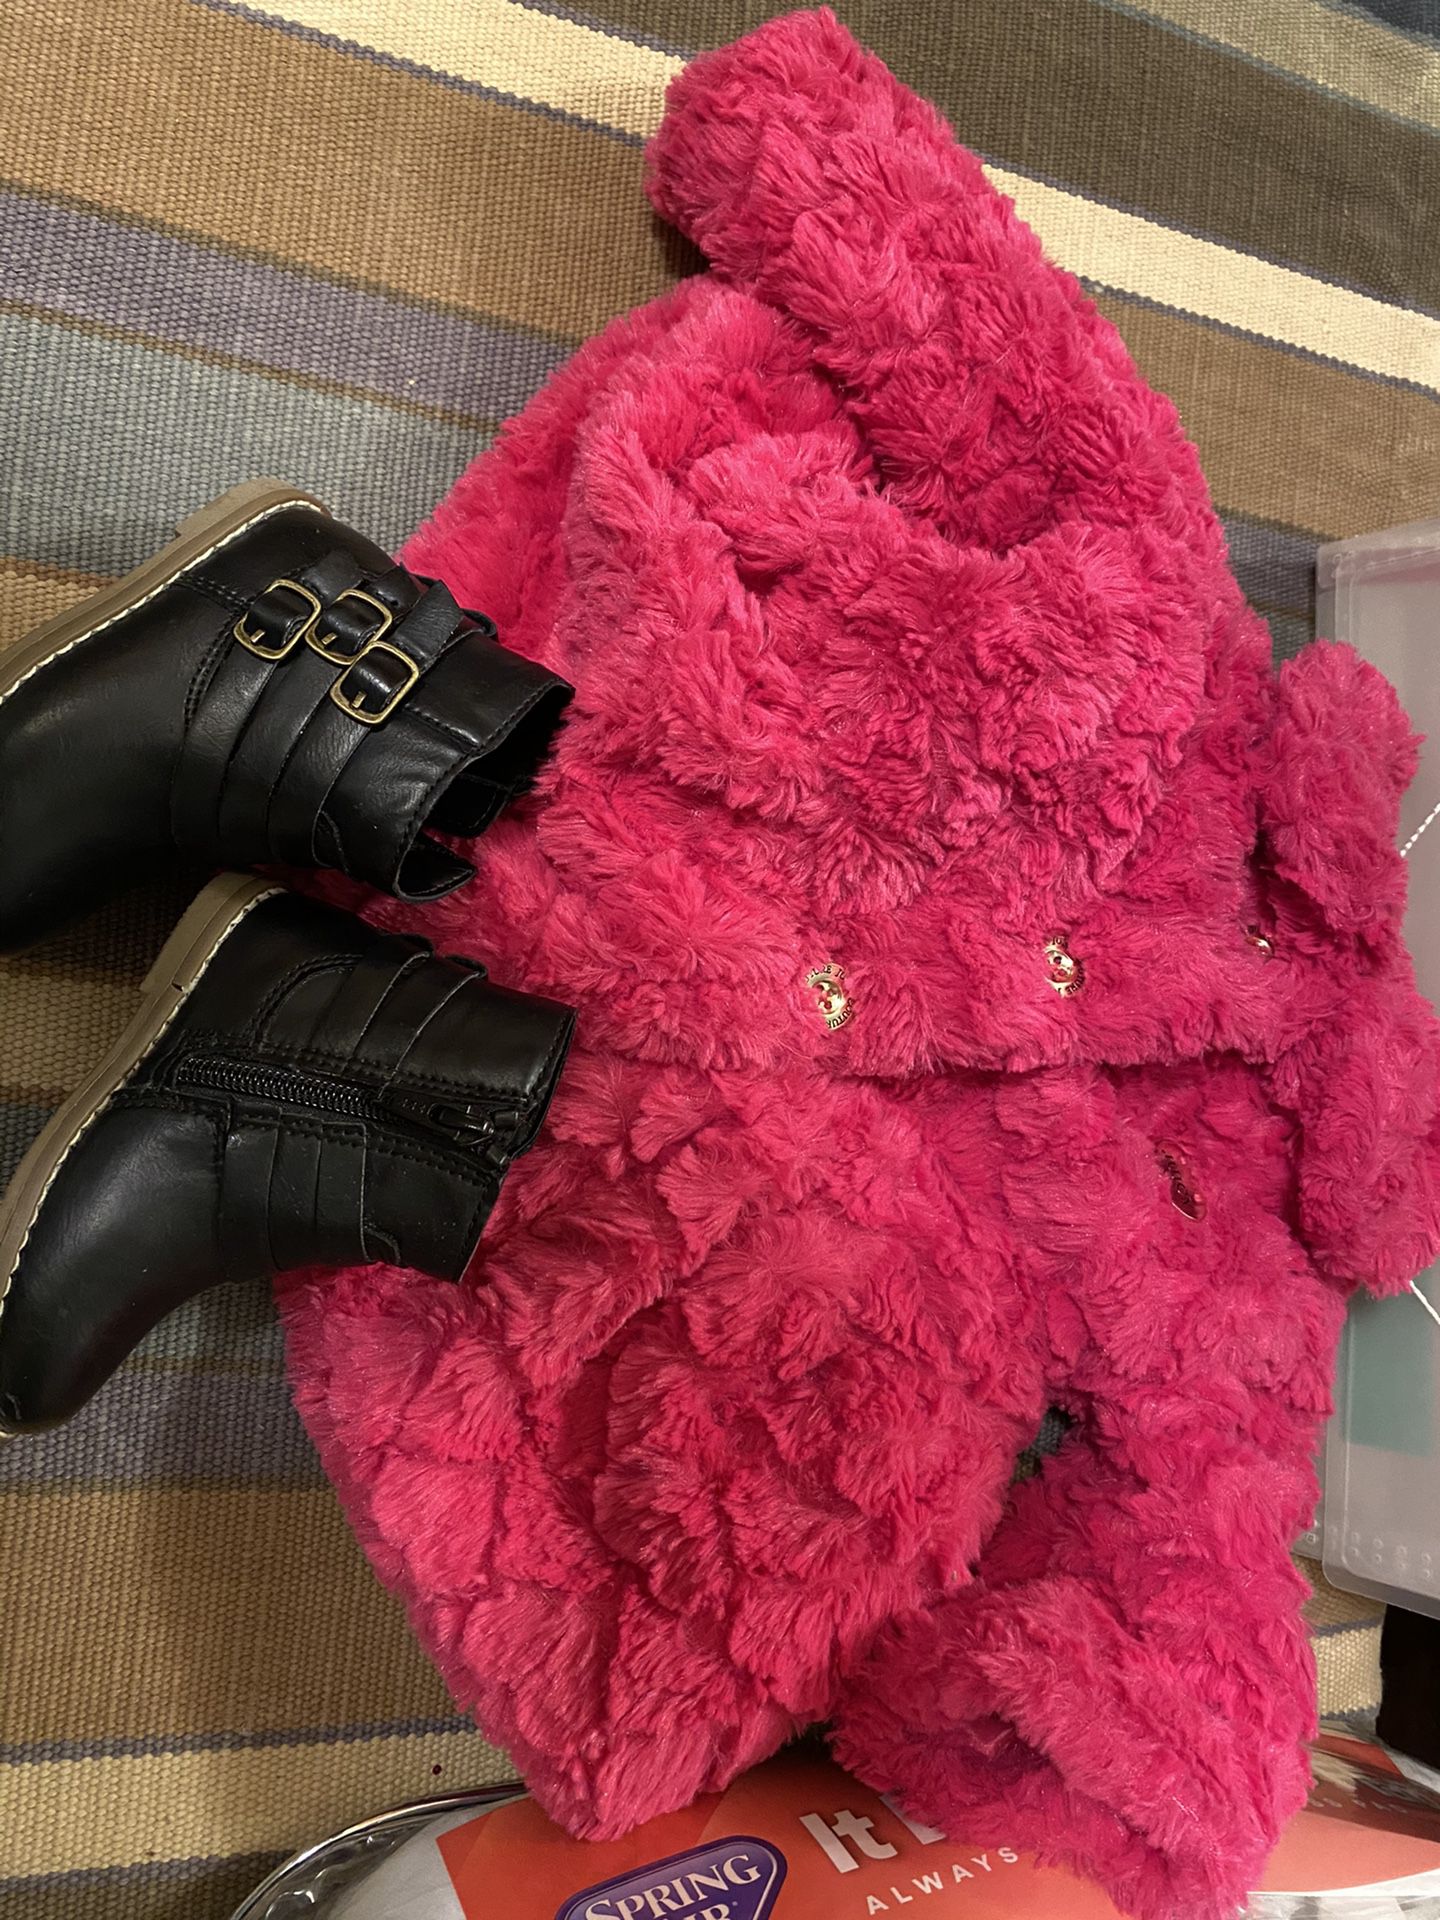 Juicy Couture Pink Fur Jacket - 12 Months